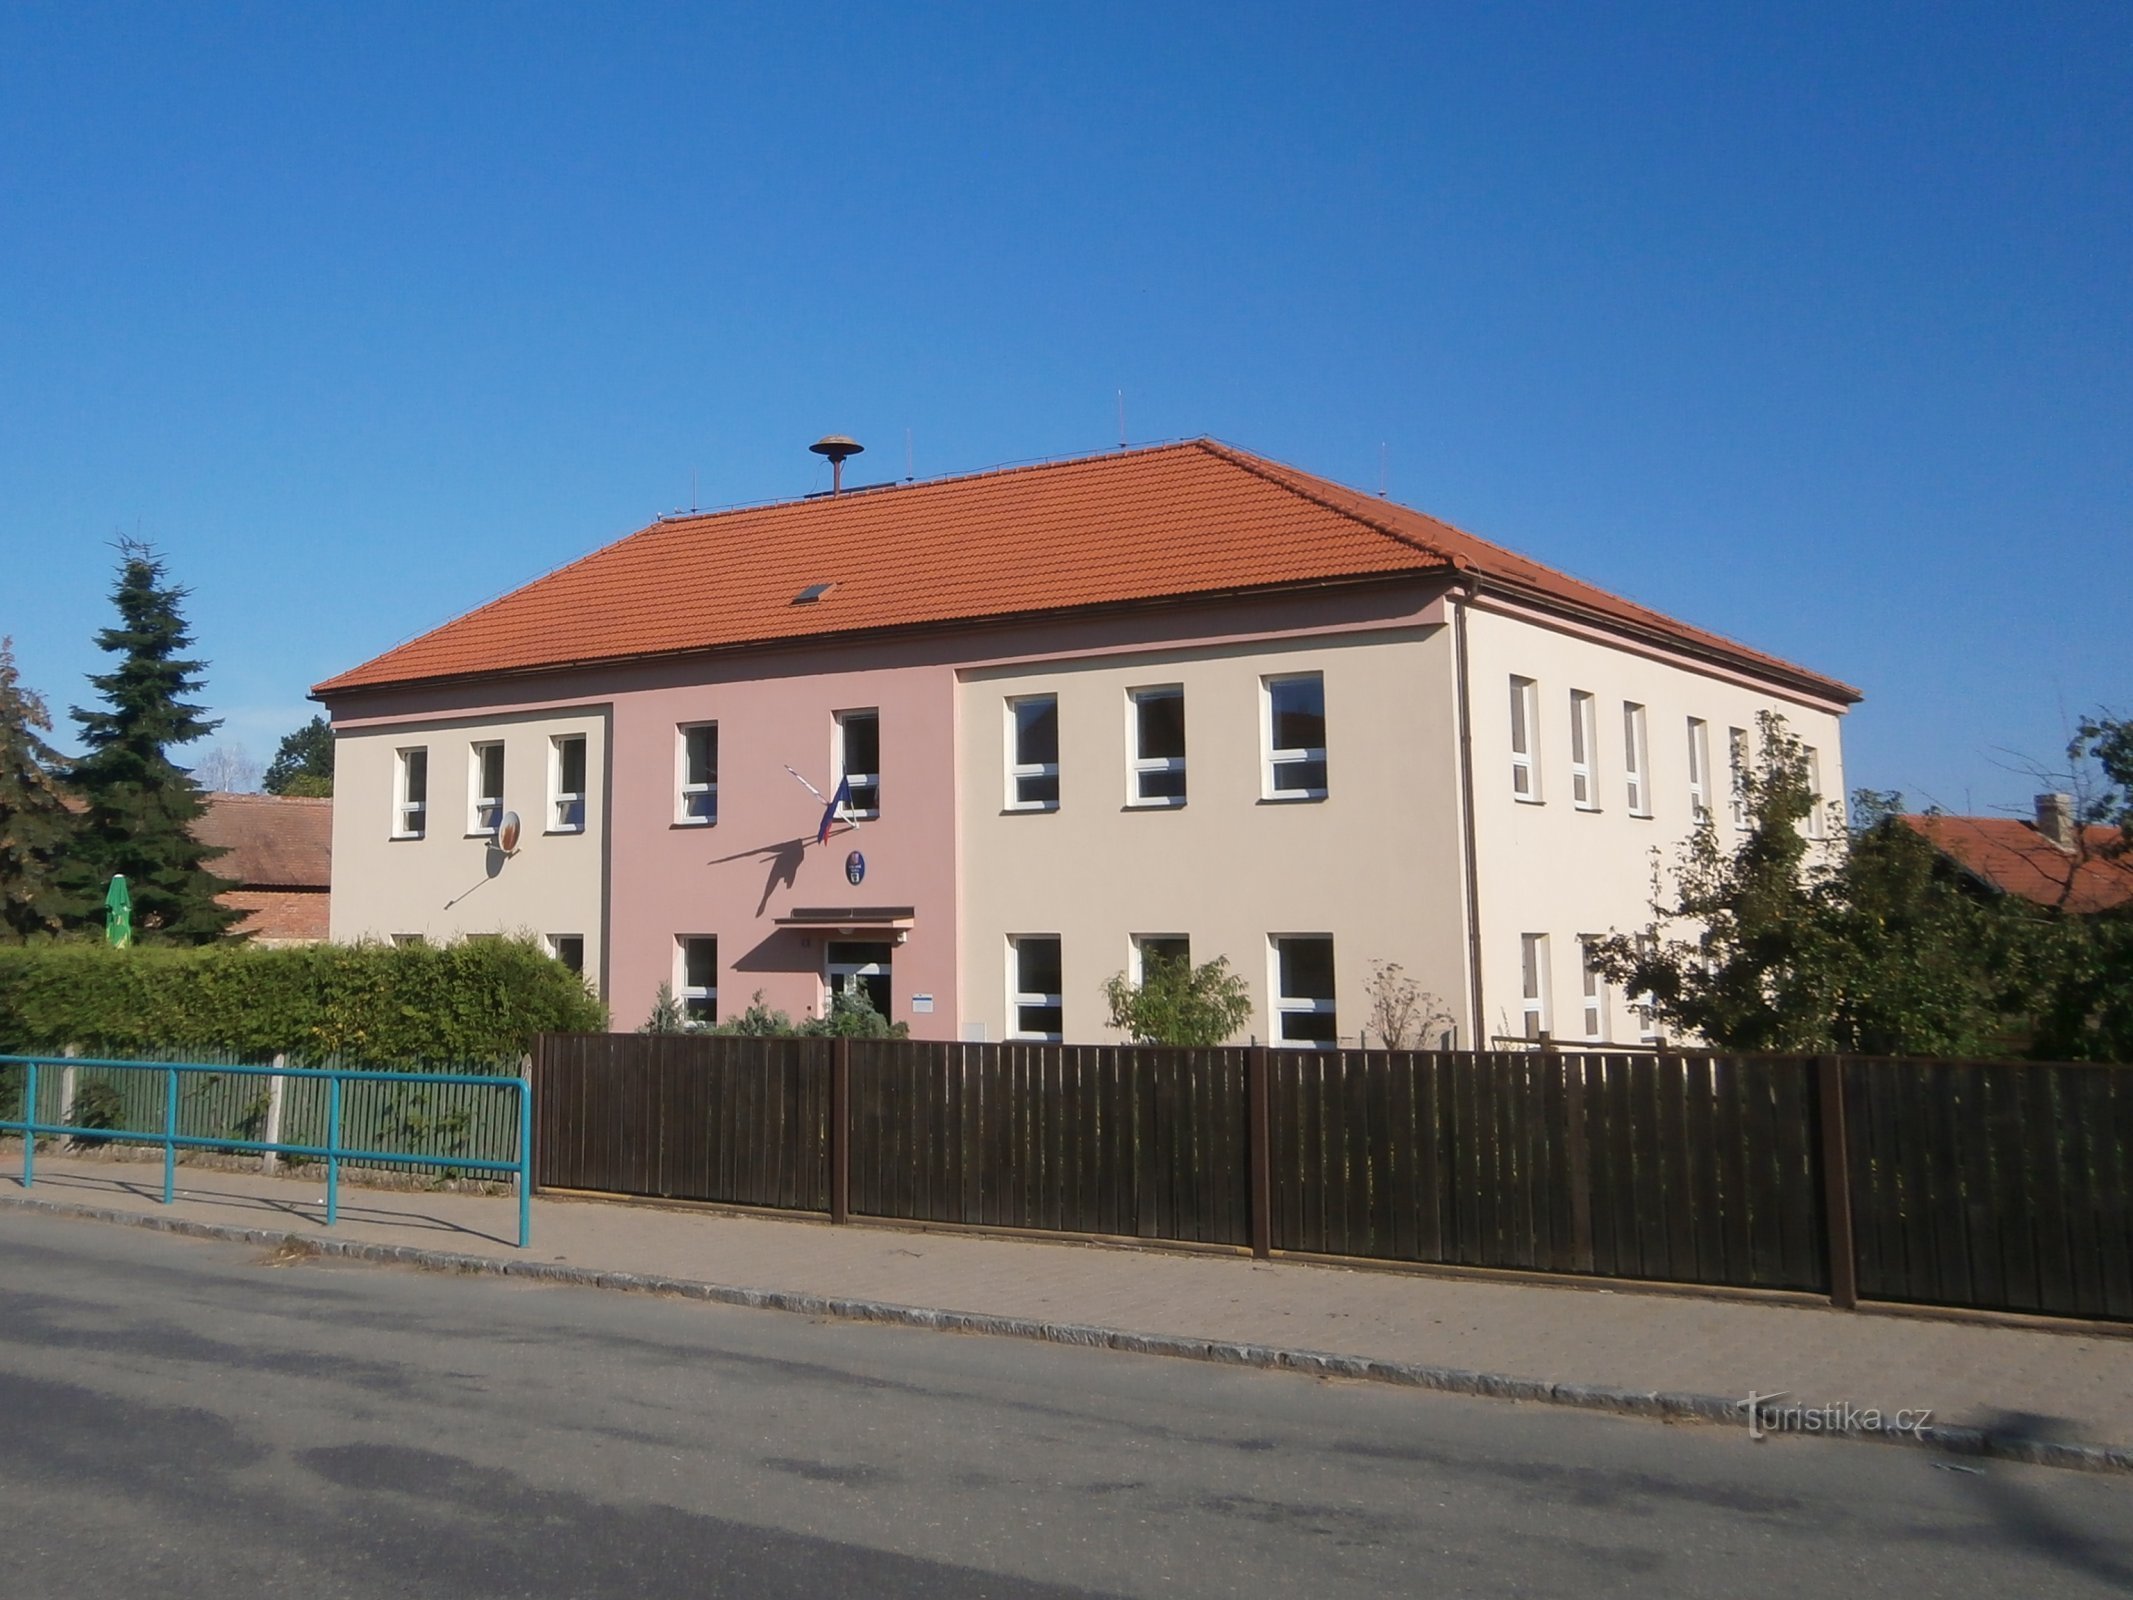 Școală (Staré Ždánice, 30.7.2017)